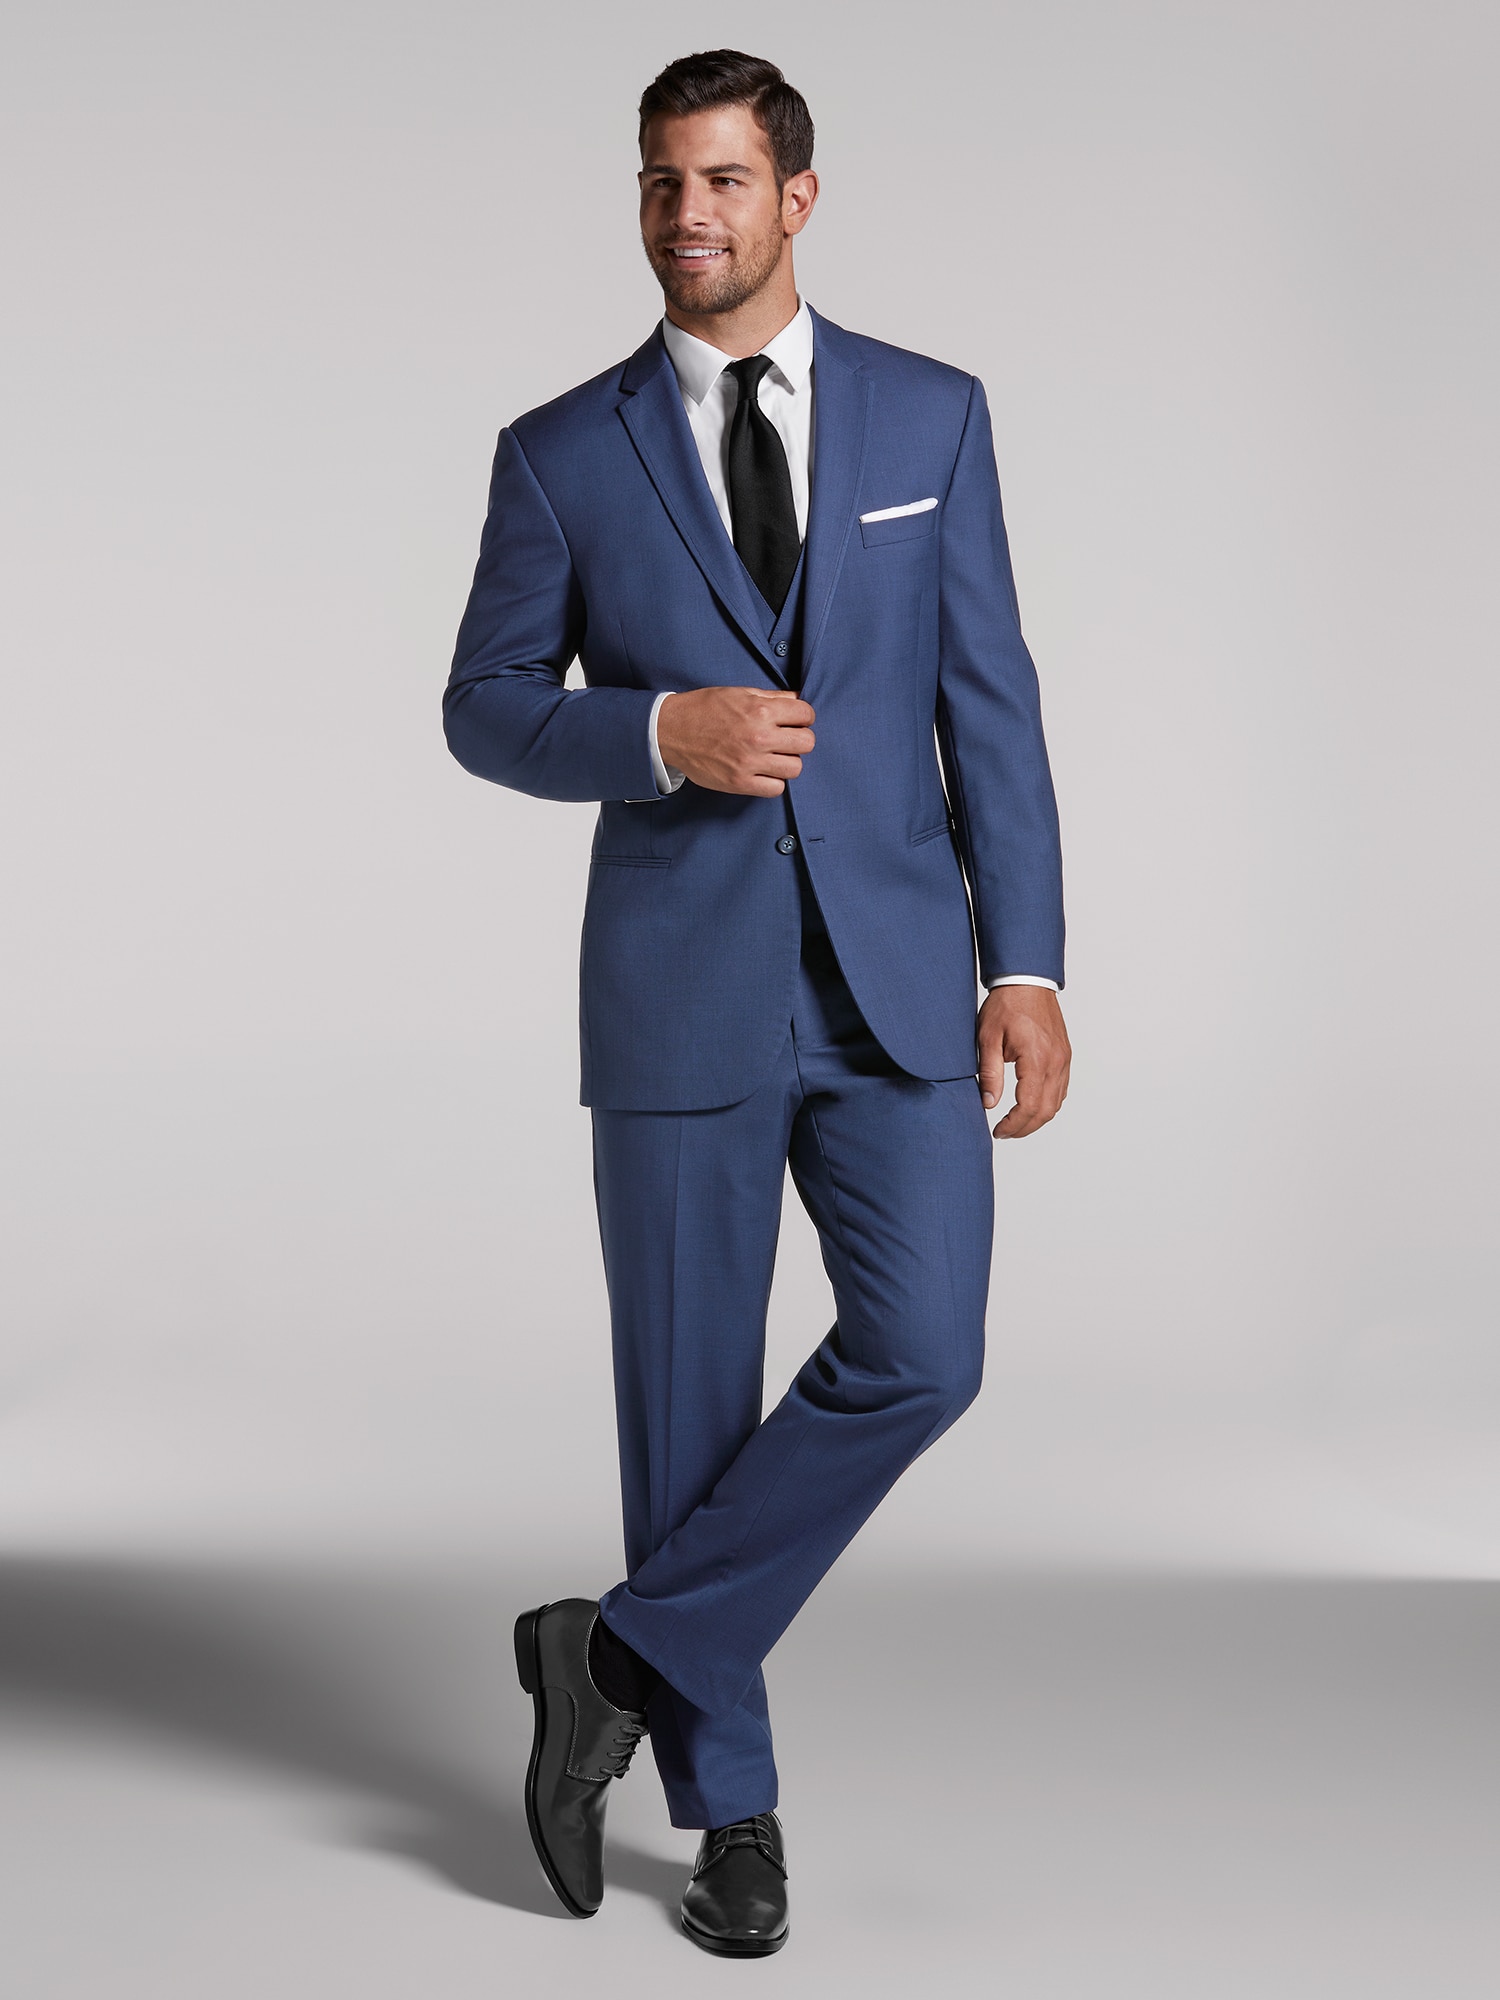 Classic Blue Business Men Suits for Wedding Suits Man Blazer Groom